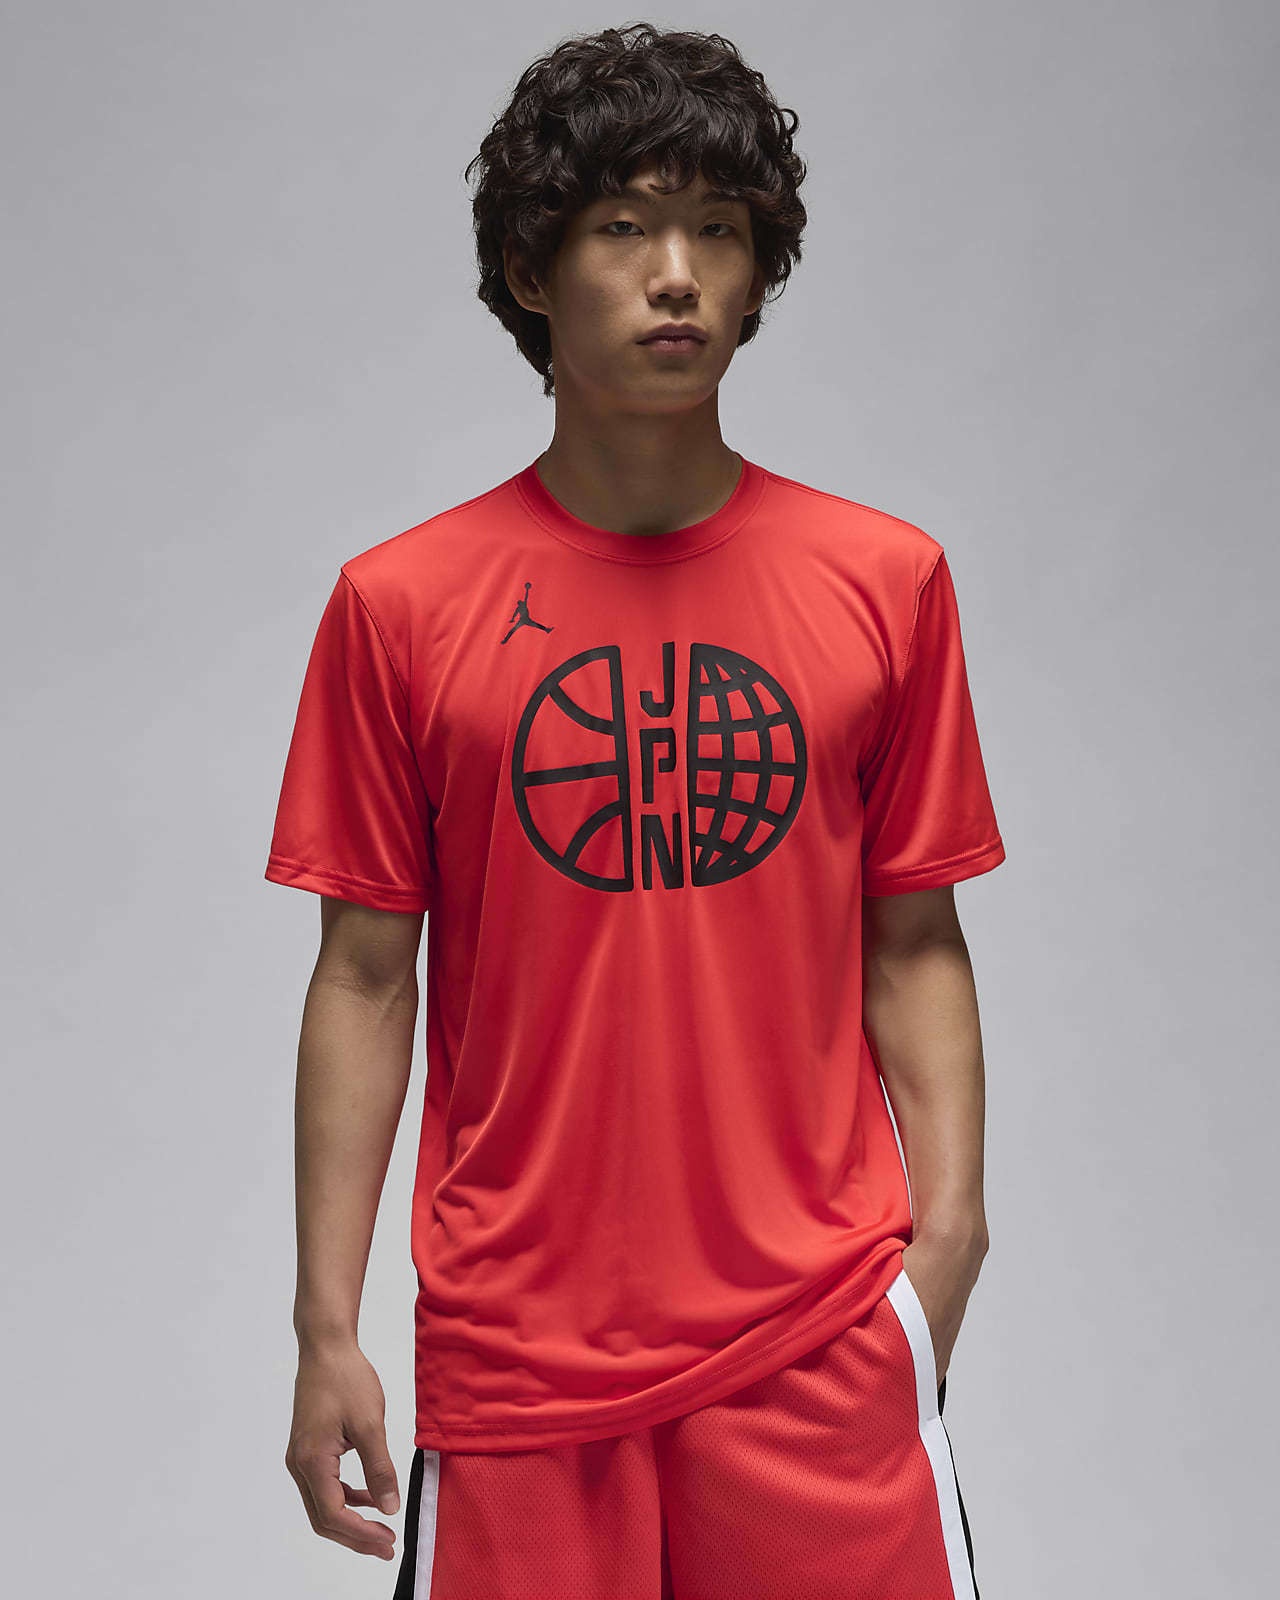 Japan Practice Men's Nike Basketball T-Shirt